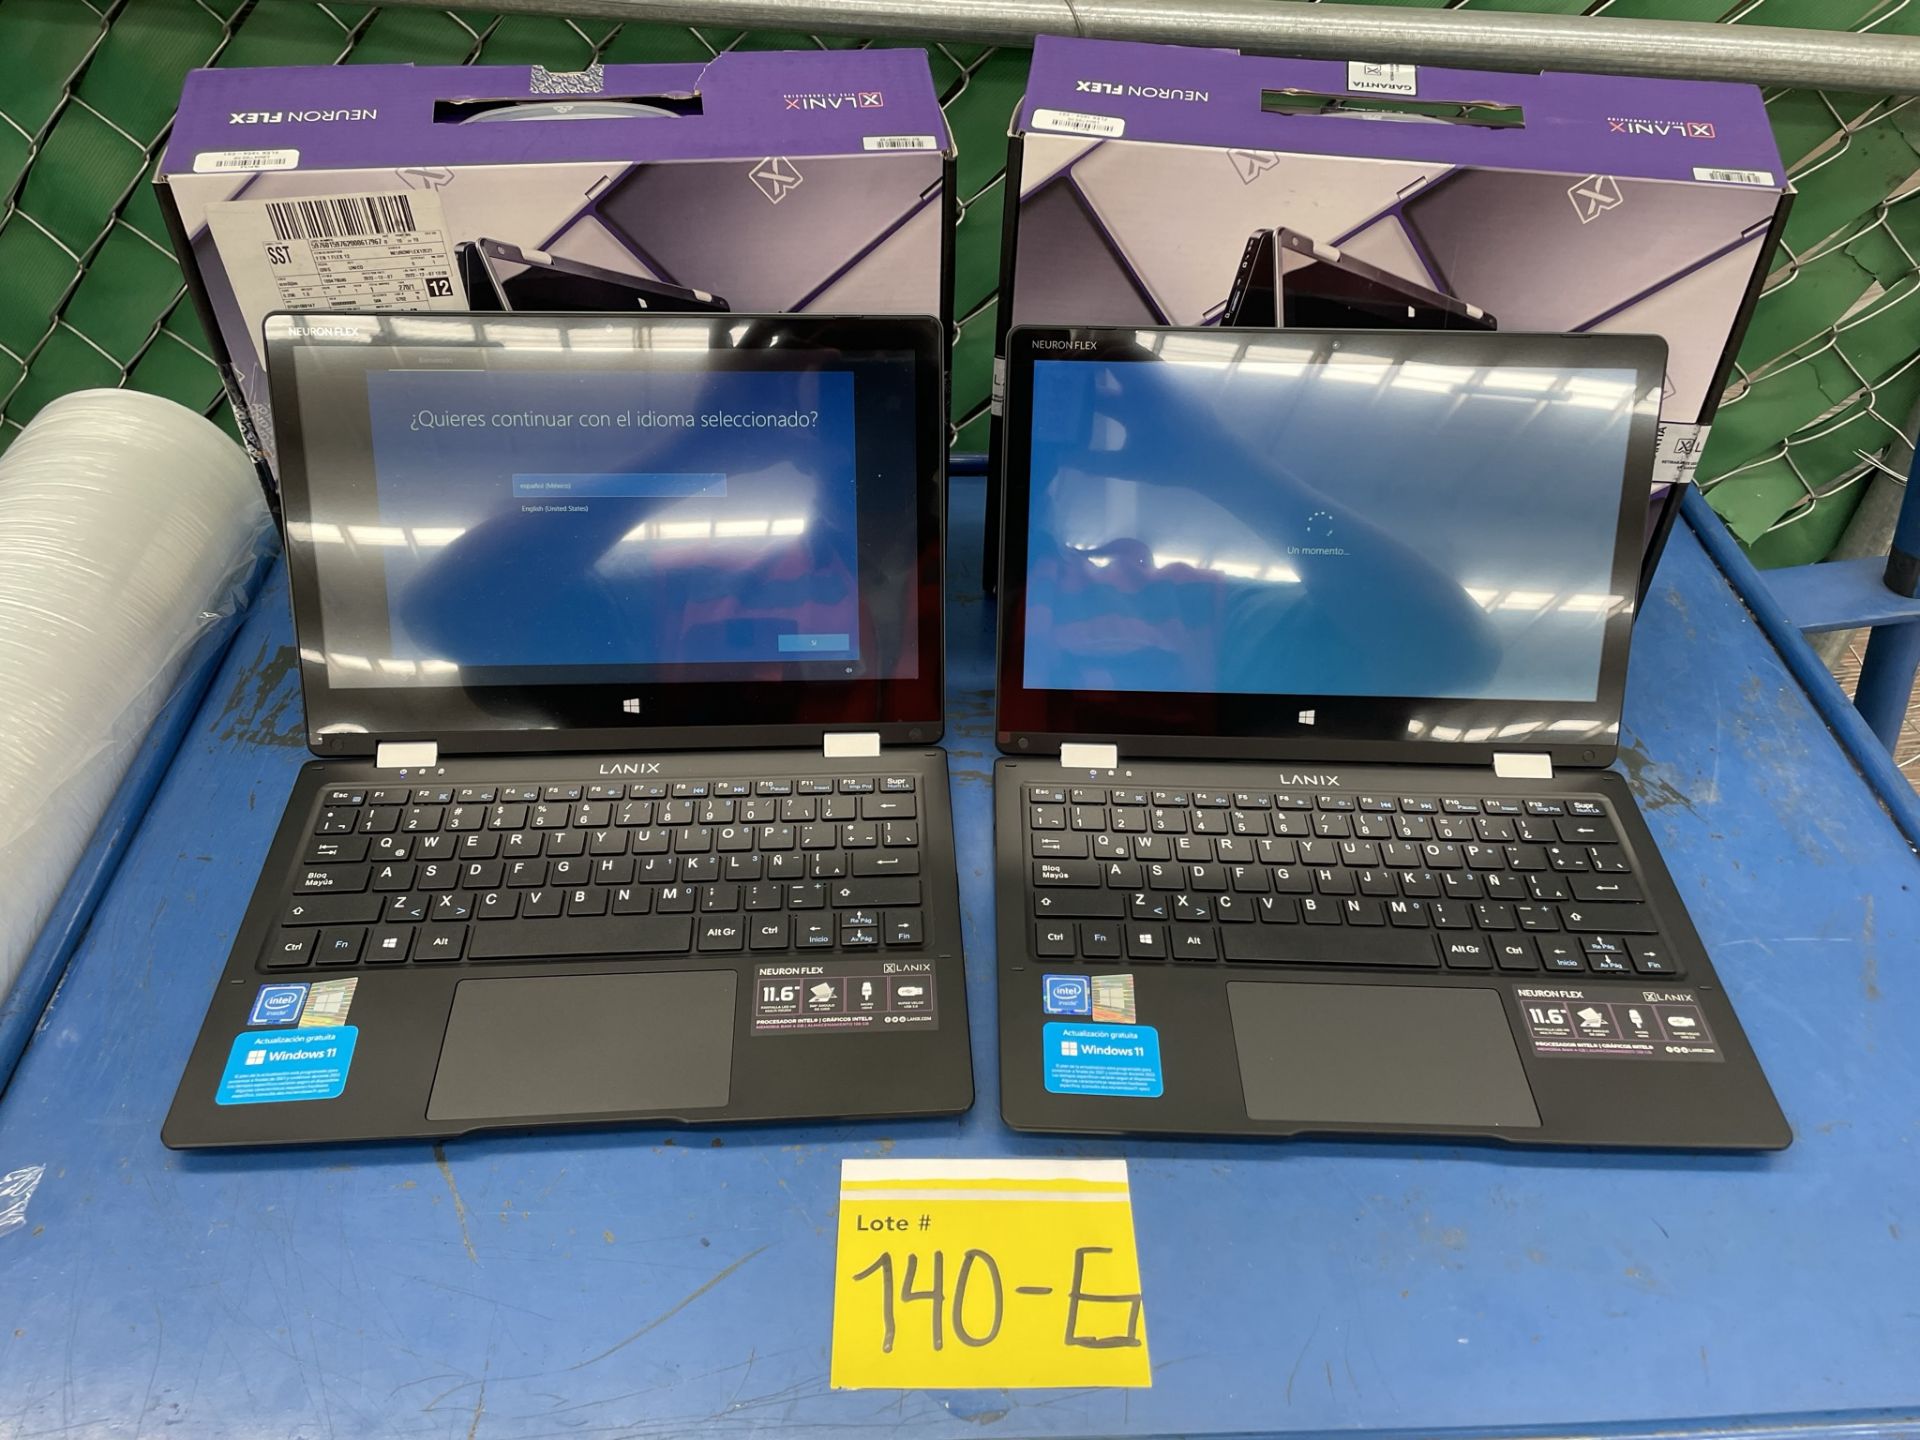 (EQUIPO NUEVO) Lote De 2 Laptops Contiene: 1 Laptop Marca LANIX, Modelo NEURON FLEX, Serie N/D, Col - Image 2 of 9